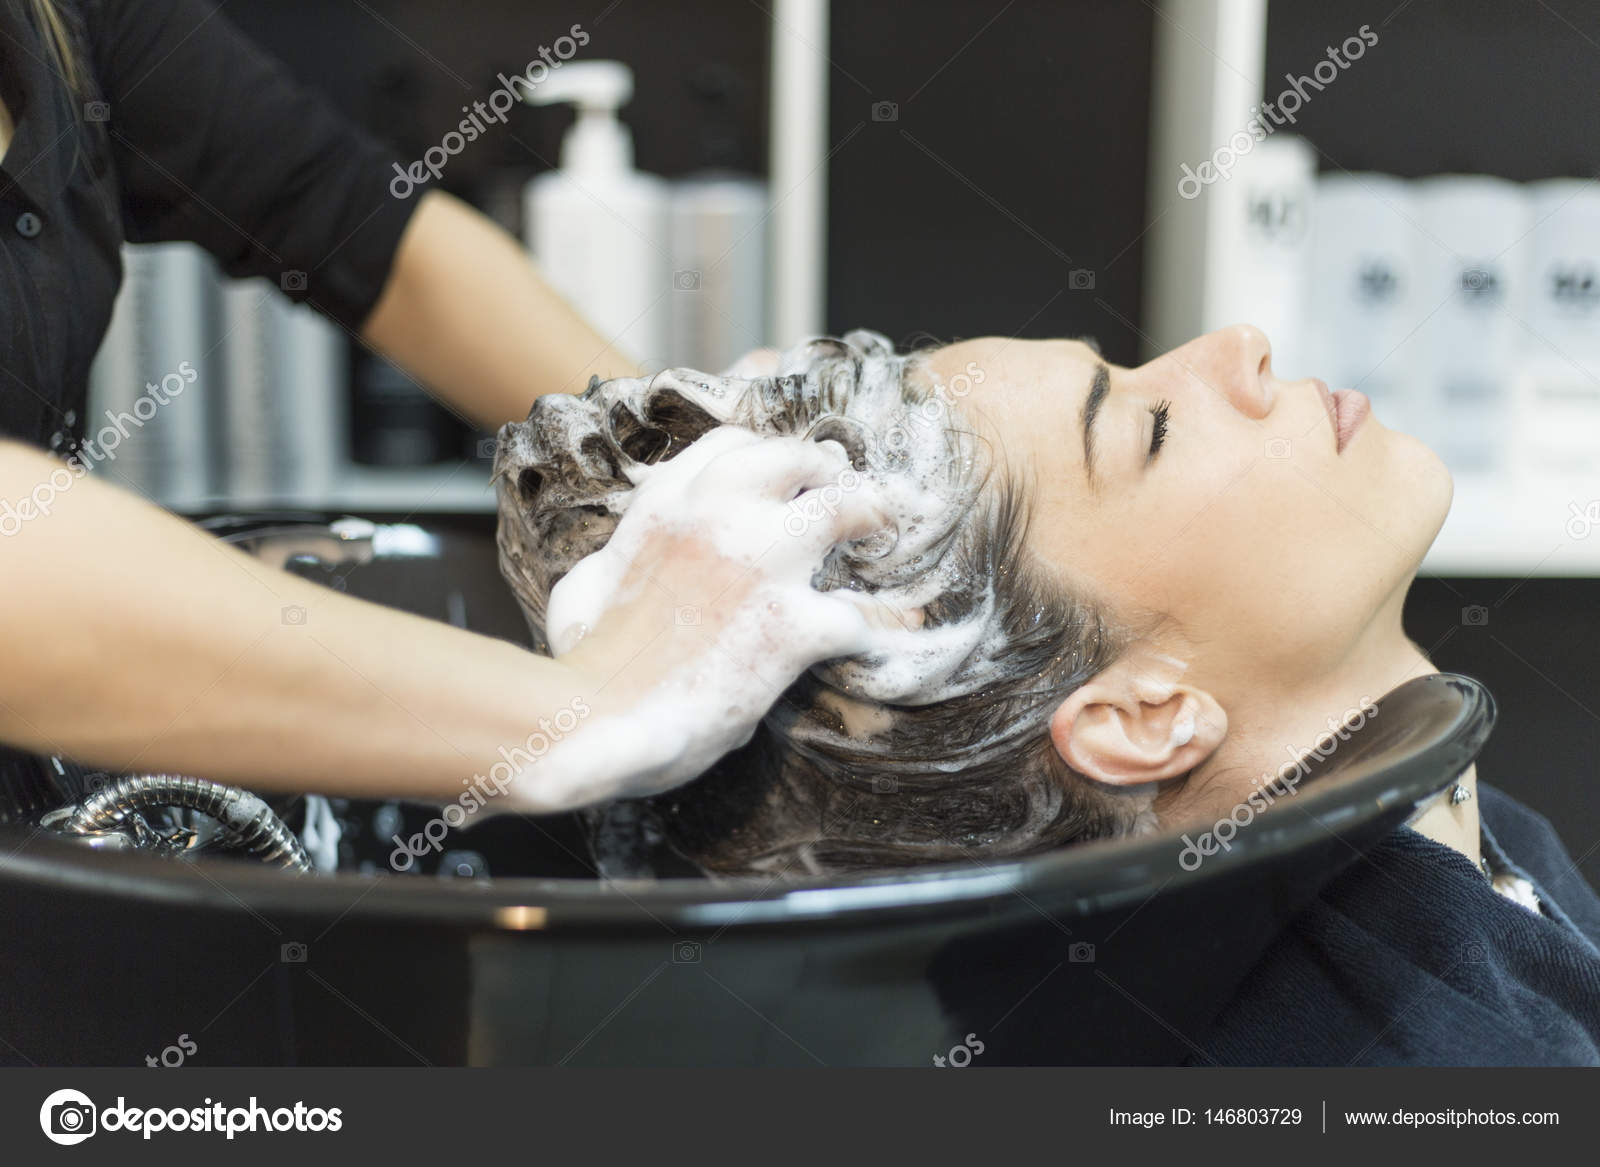 Норма мытья головы. Мытье головы. Мытье волос в парикмахерской. Мытье головы в салоне красоты. Мытьё головы в парикмахерской.